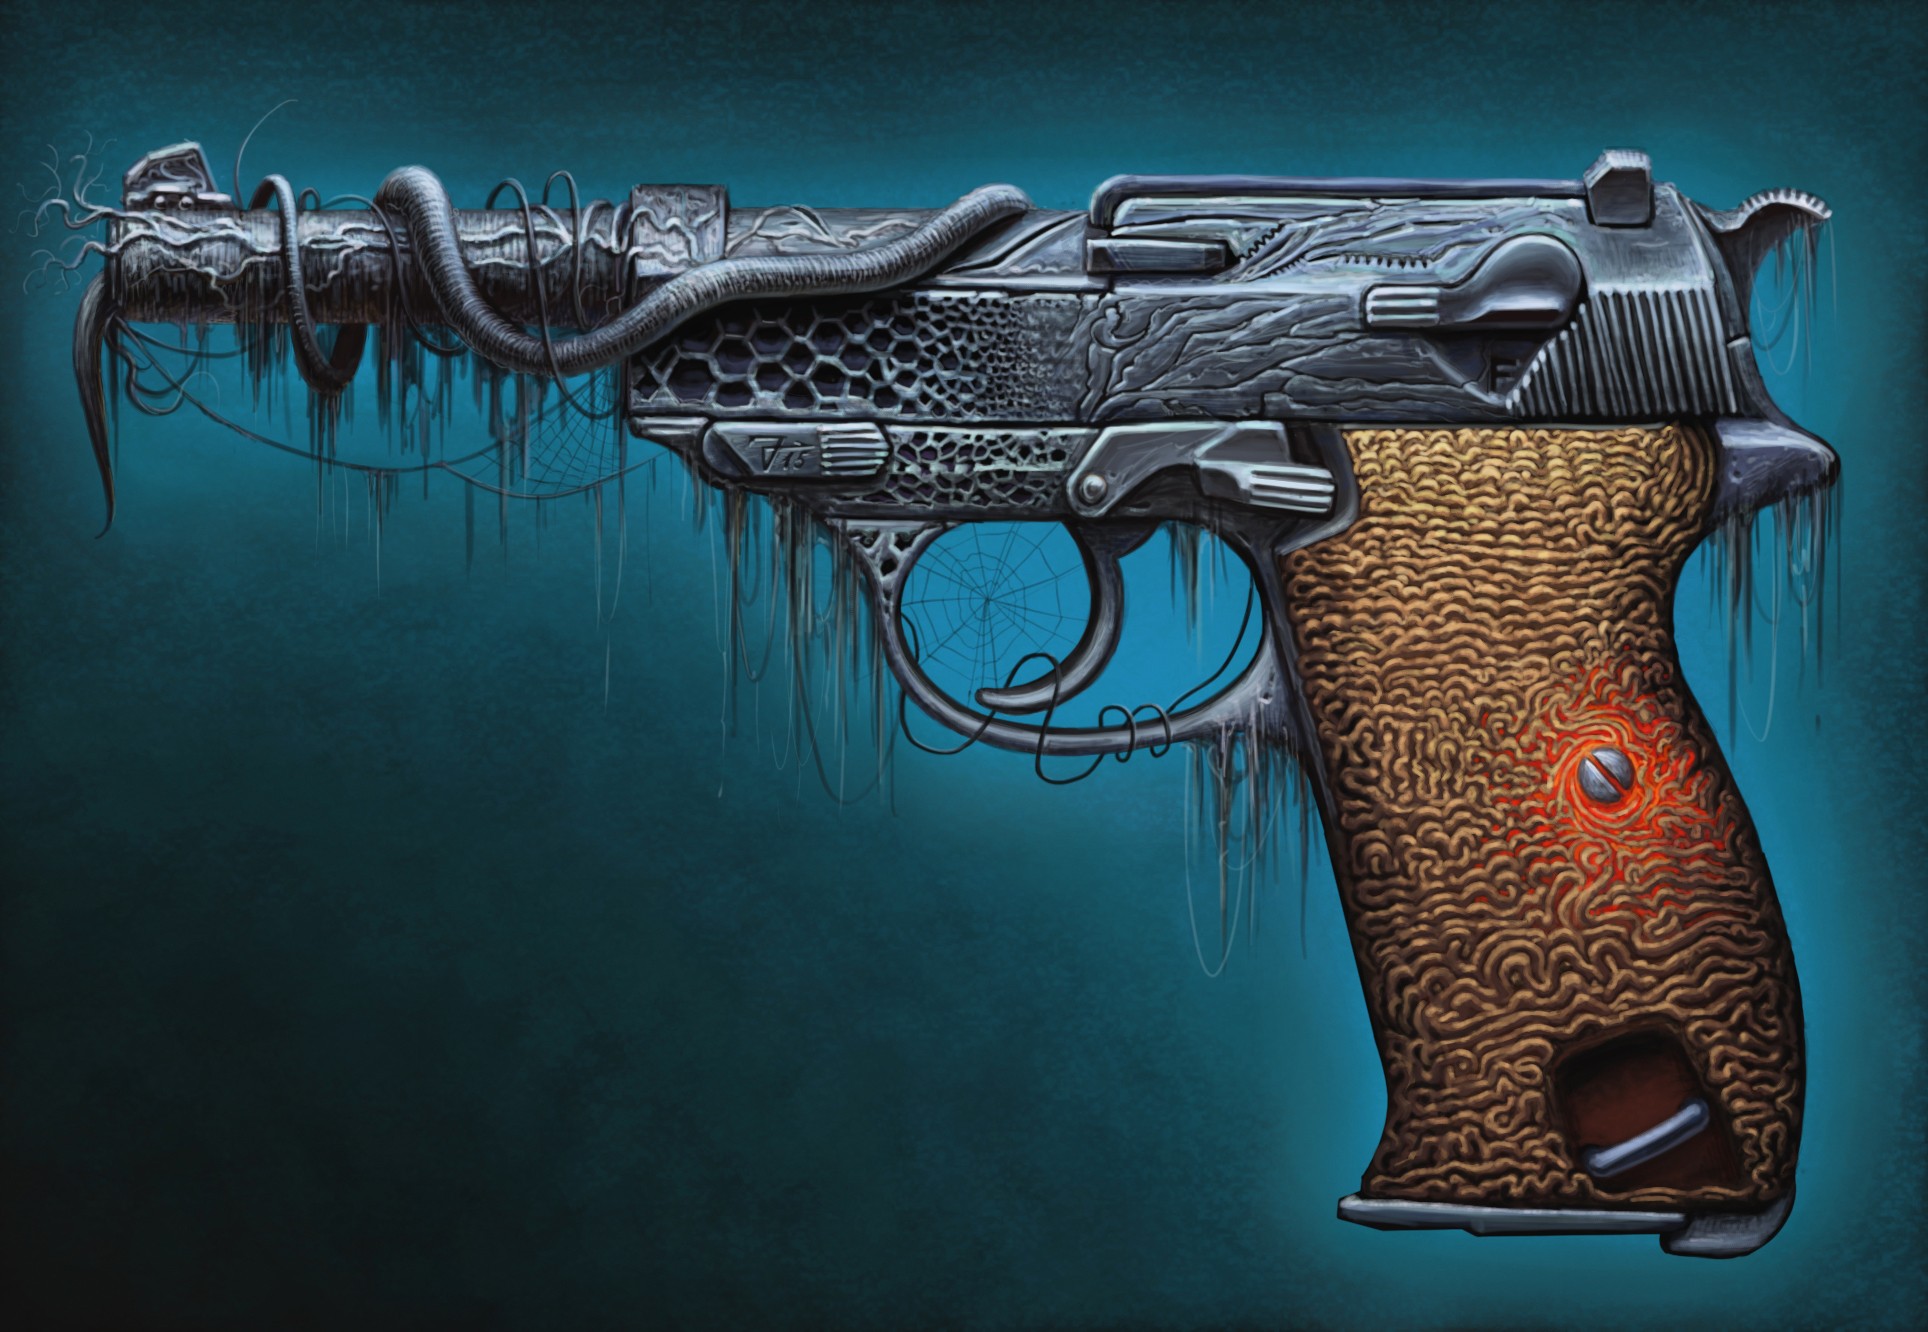 Wallpapers gun weapon artwork on the desktop